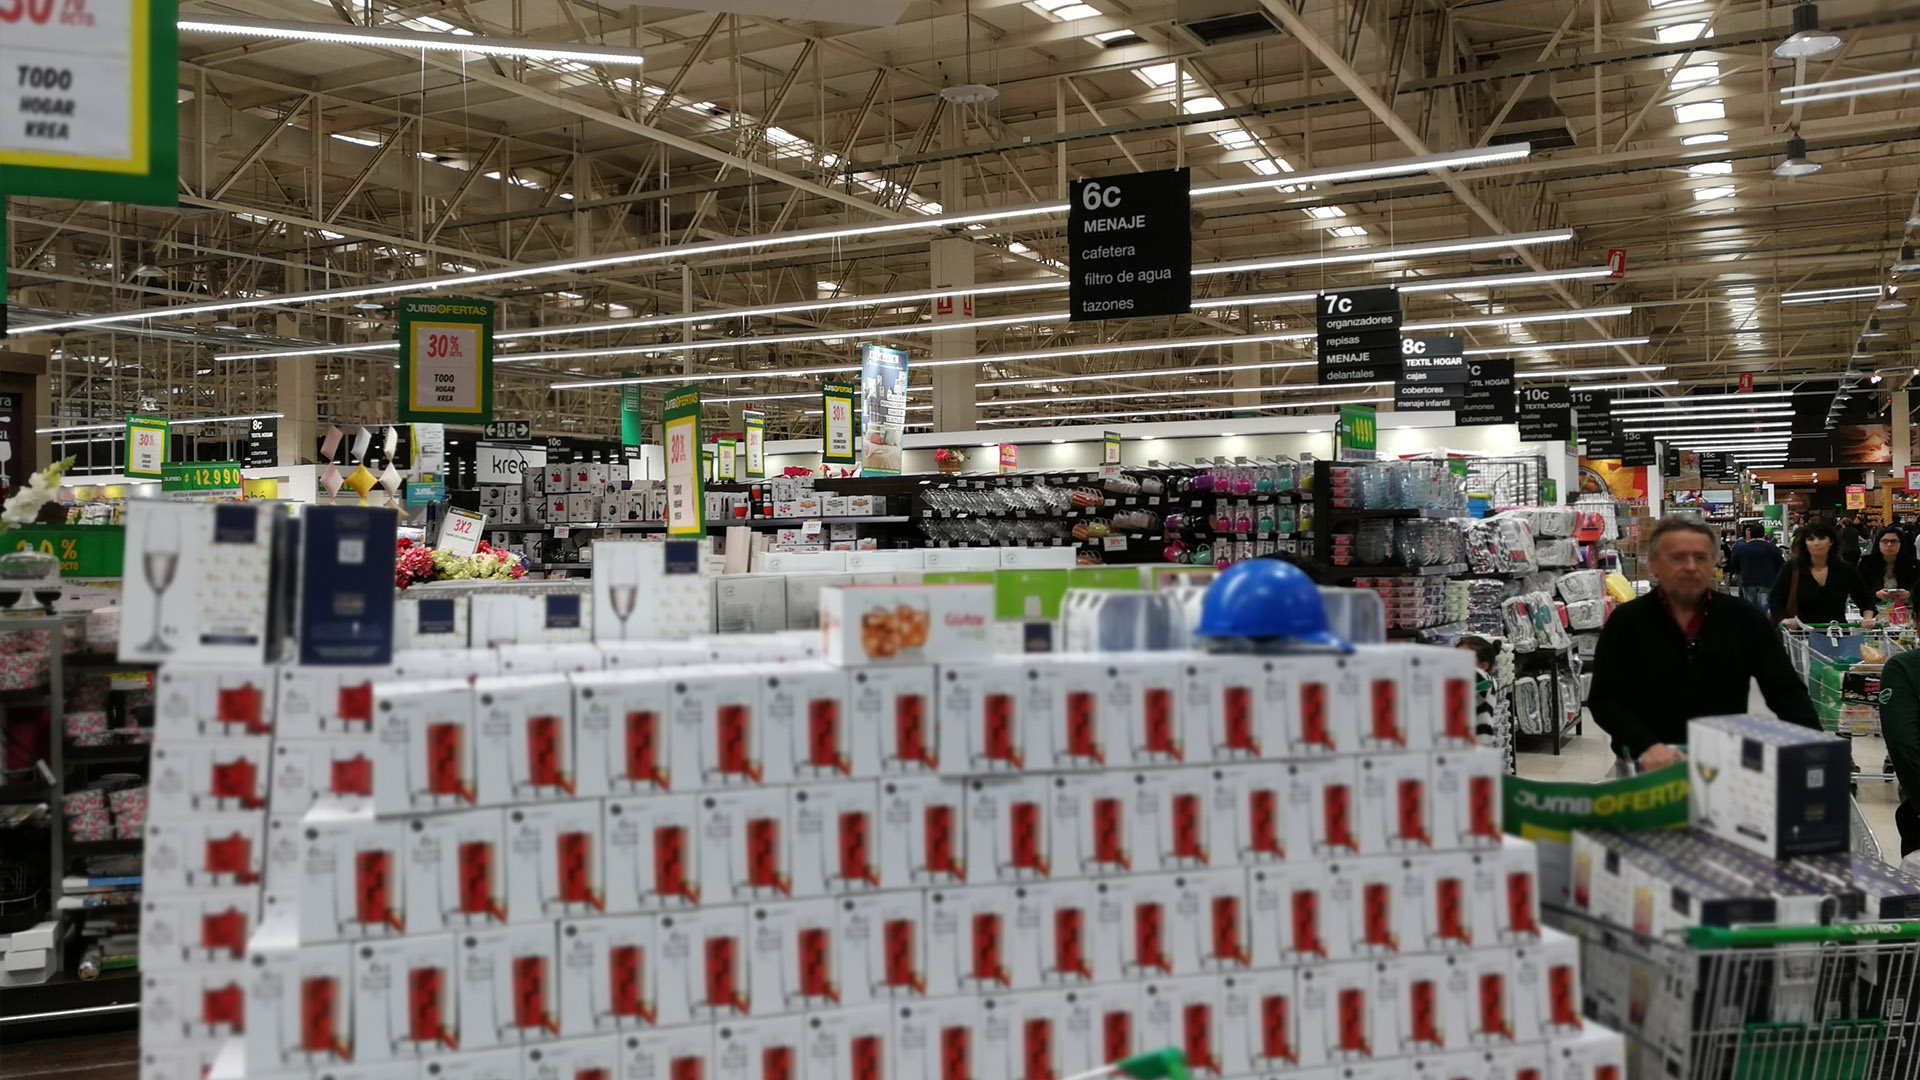 JUMBO supermarket in Brazil (3)